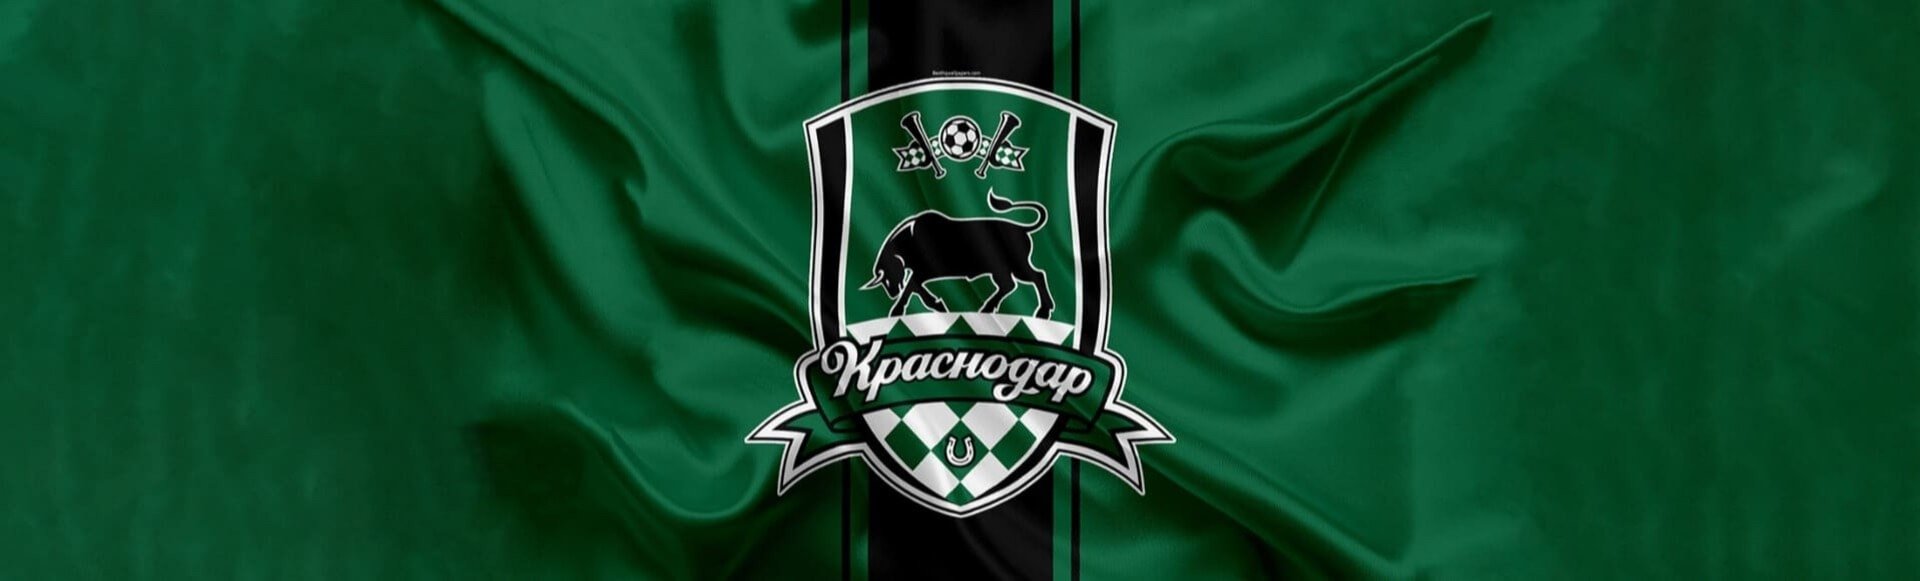 Krichalki i rechevki FK Krasnodar